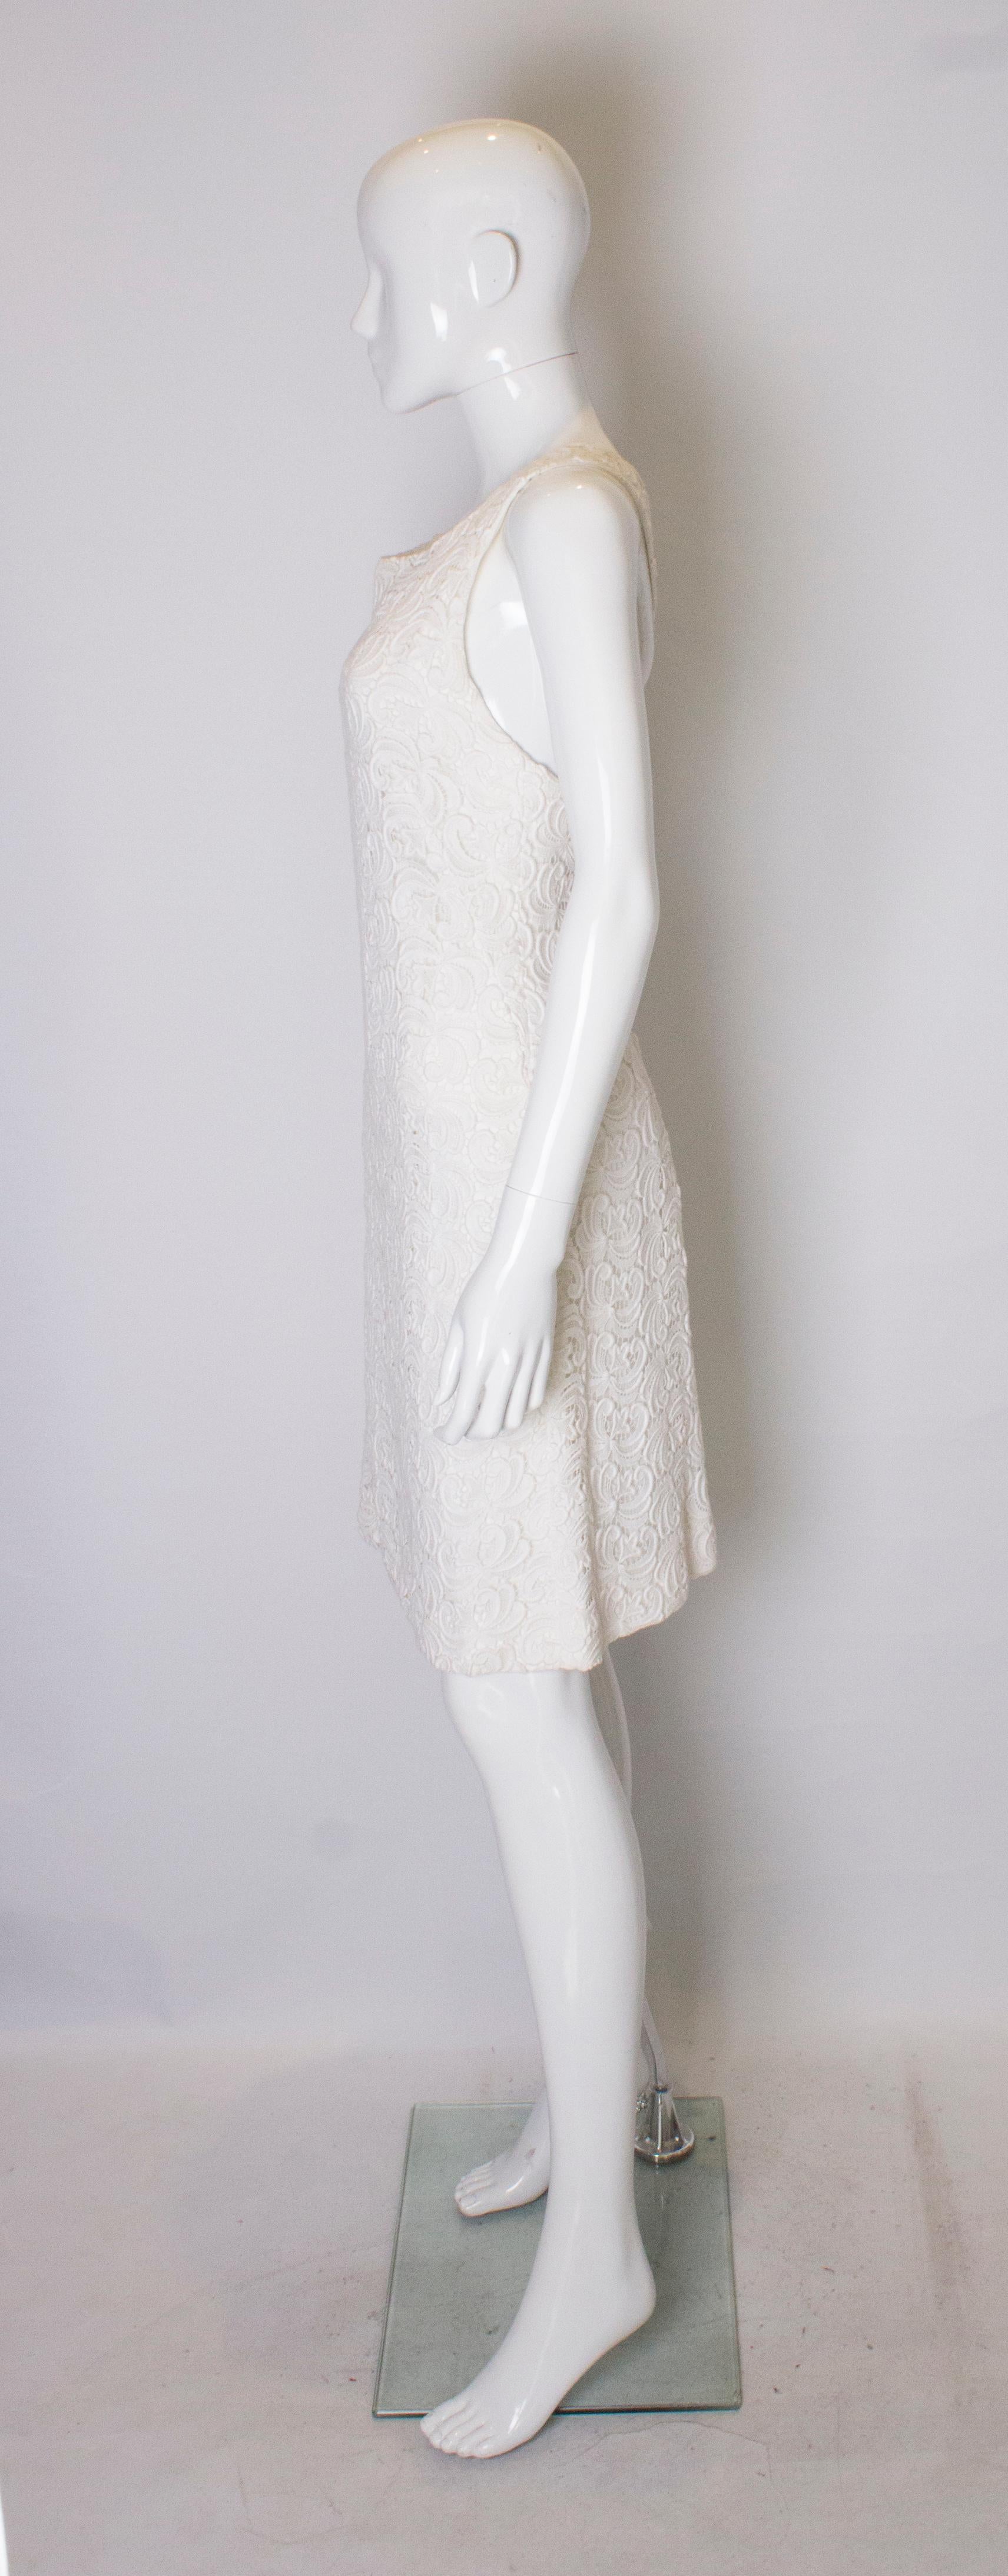 Women's Vintage White Cocktail Dress